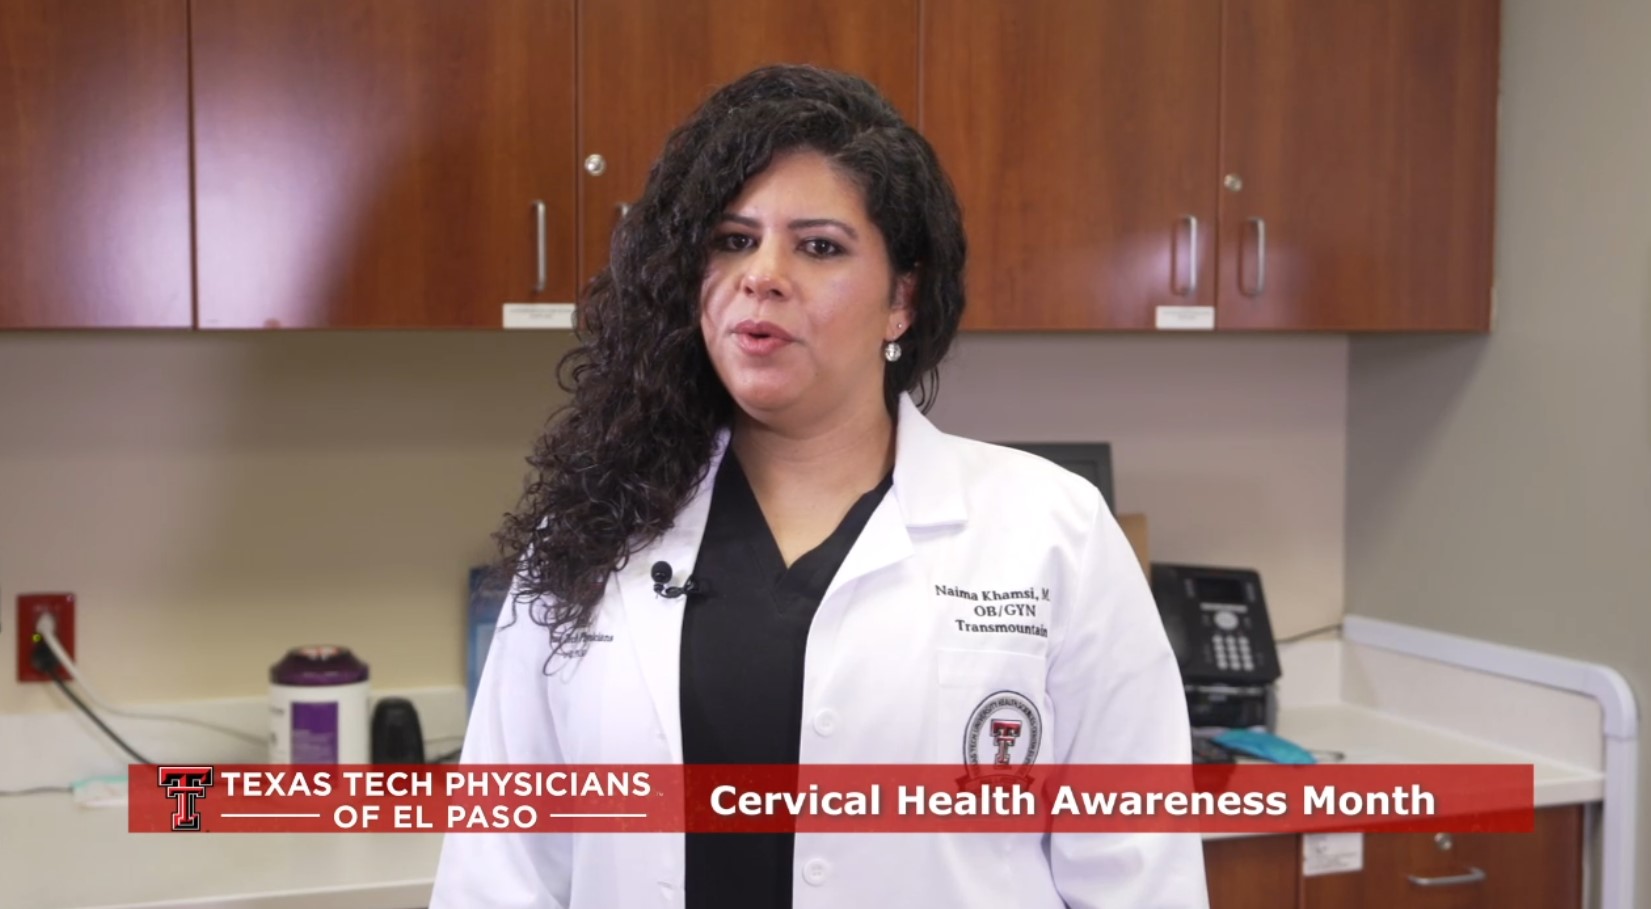 Cervical Cancer Awareness Month video